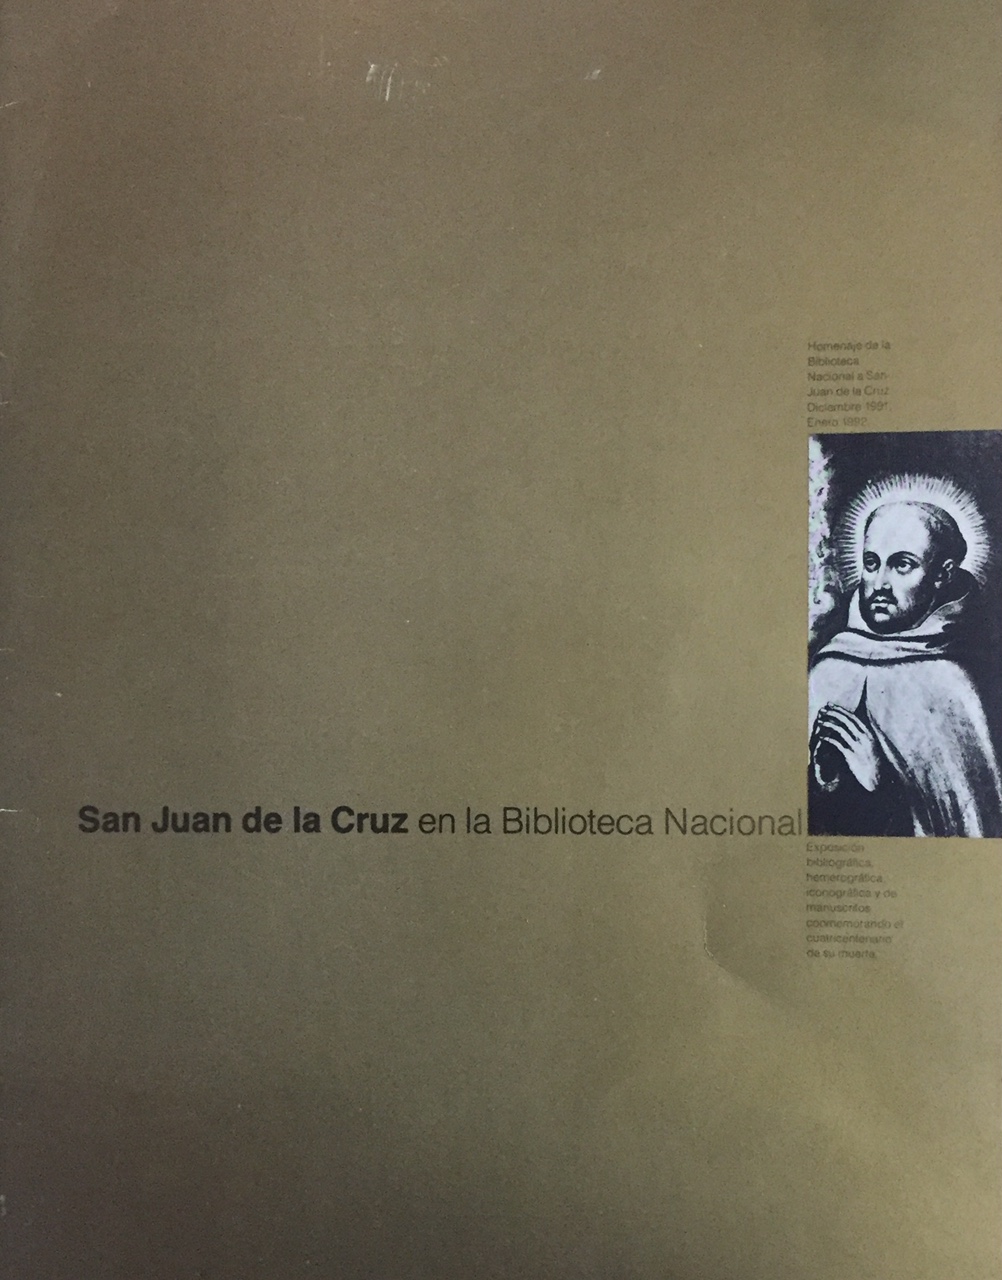 San Juan de la Cruz en la Biblioteca Nacional